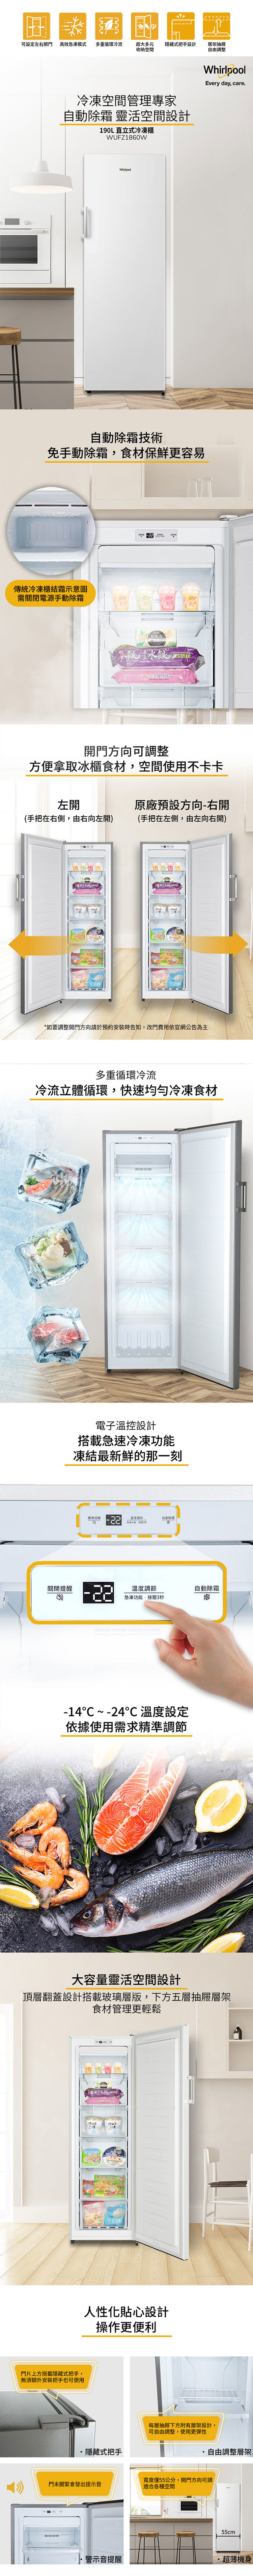 WUFZ1860W 冷凍櫃 190L 直立式 自動除霜